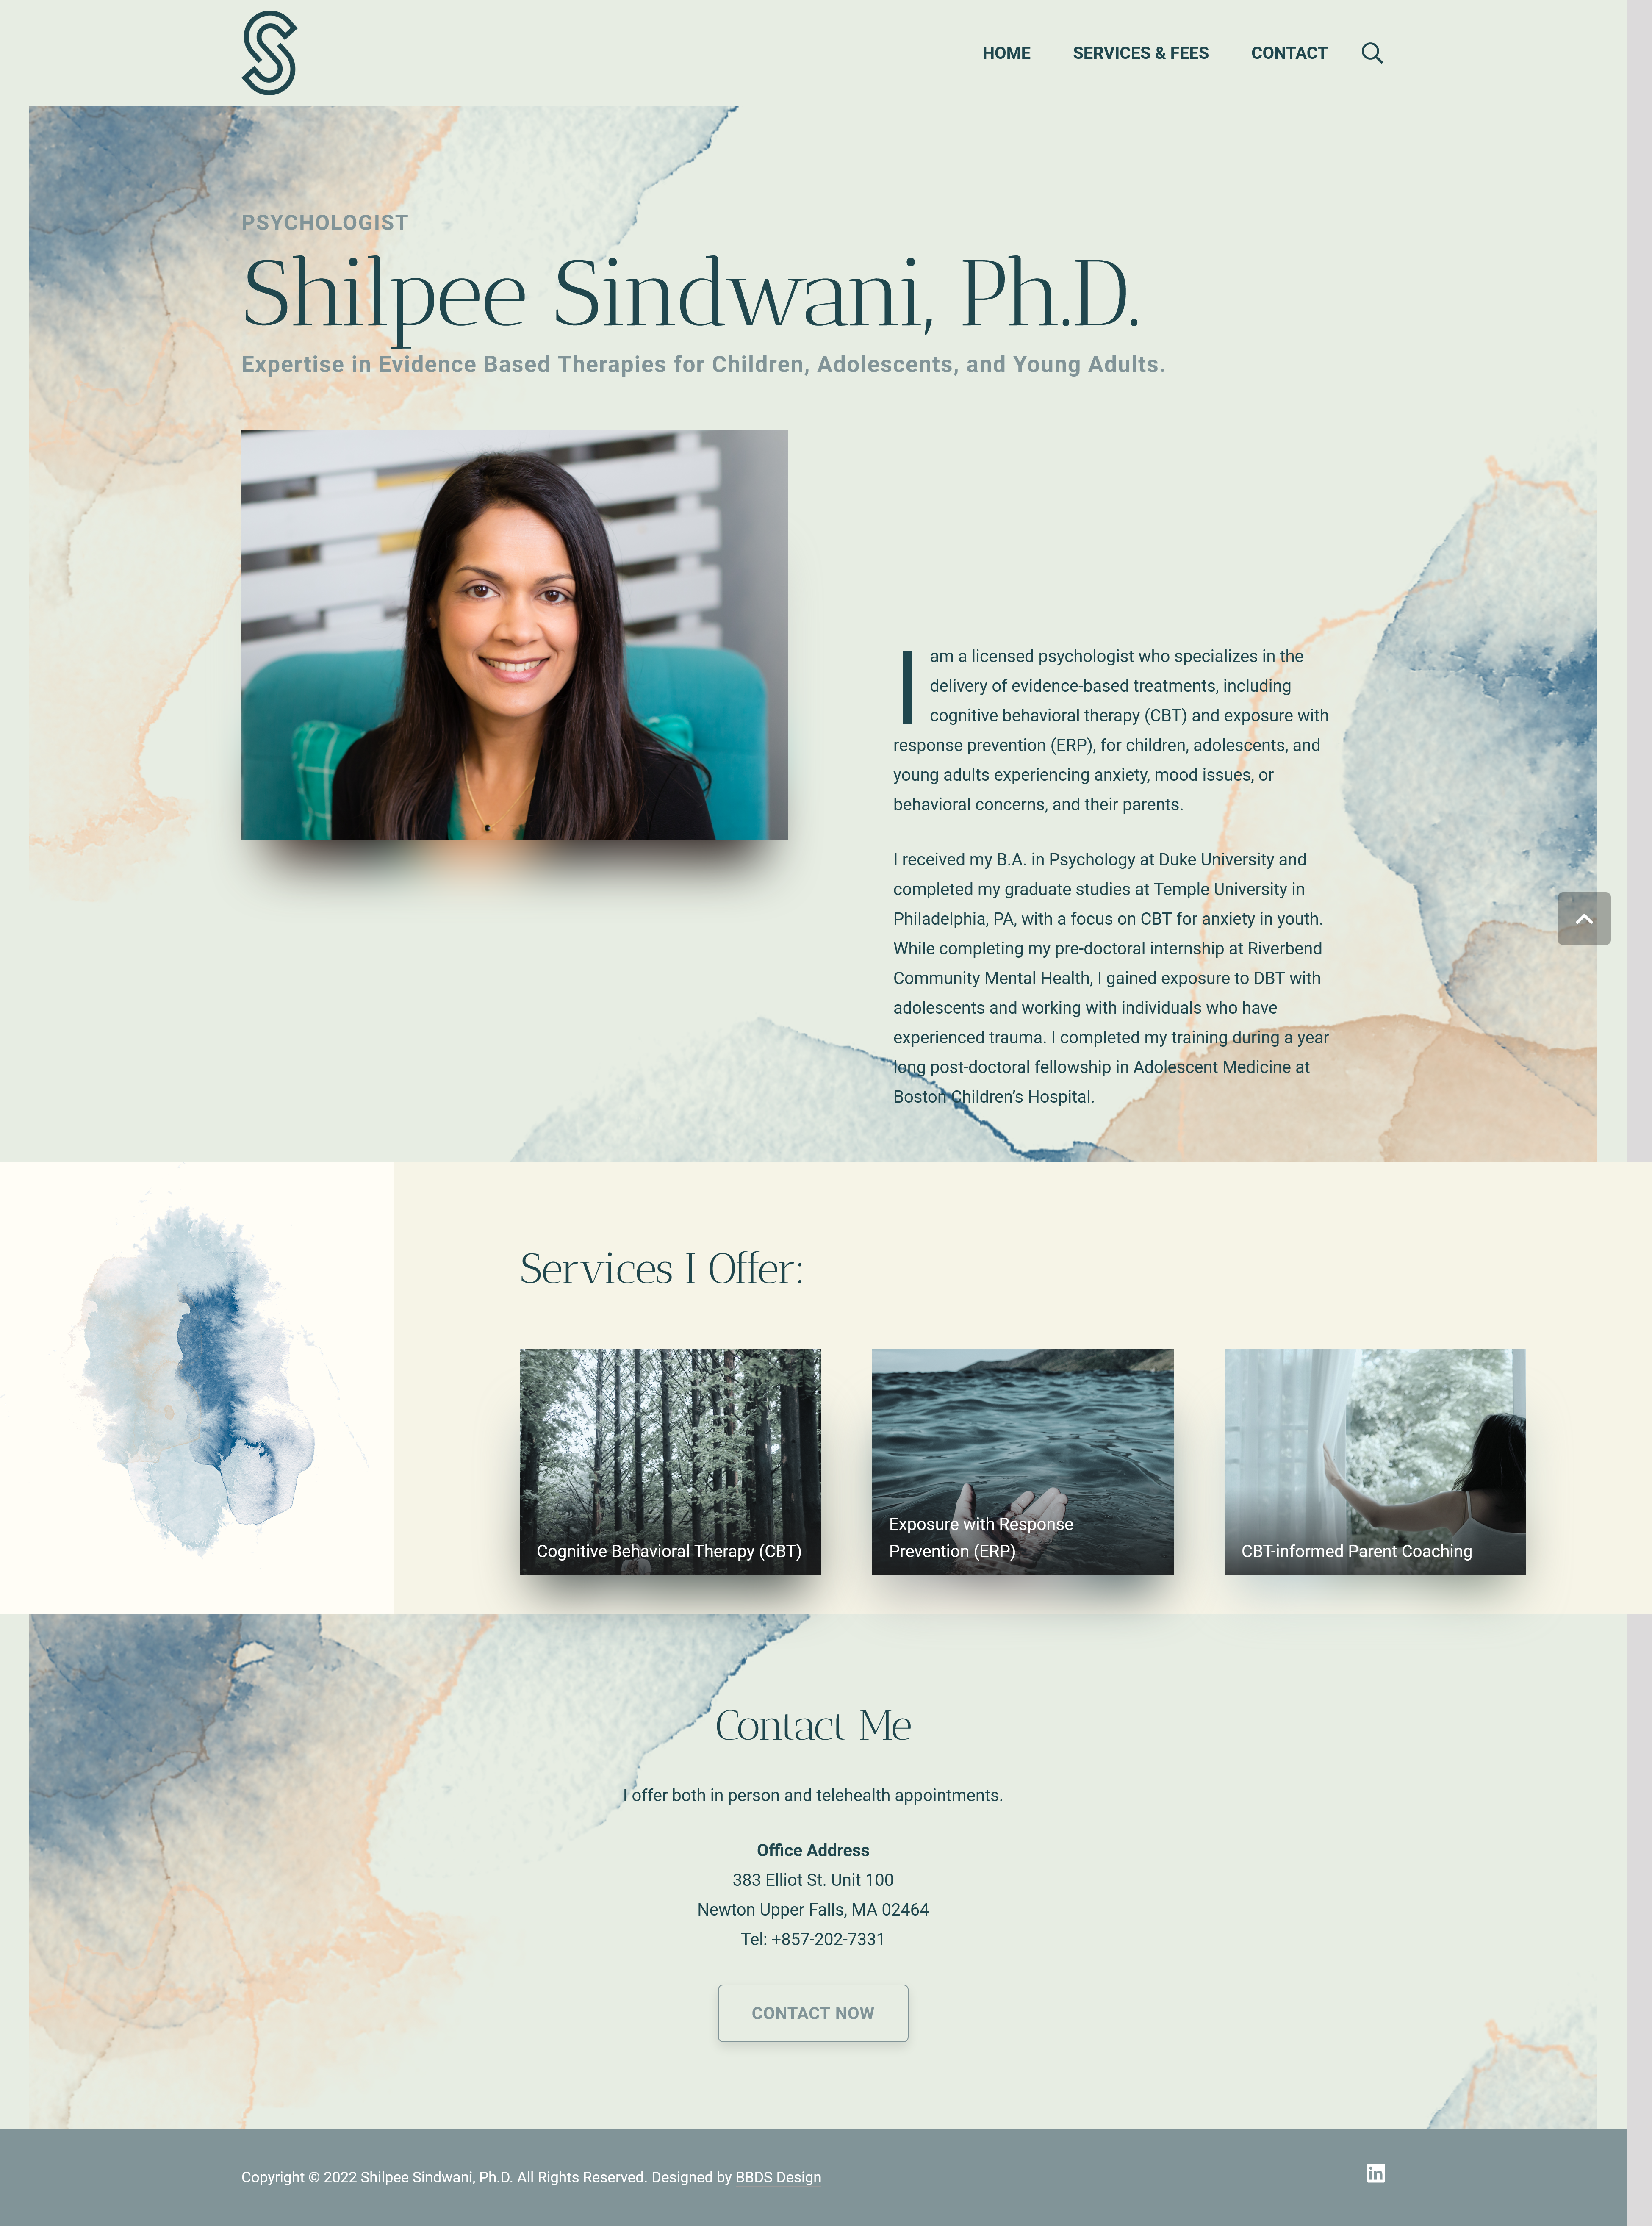 Shilpee Sindwani, Ph.D. - A Therapy Website